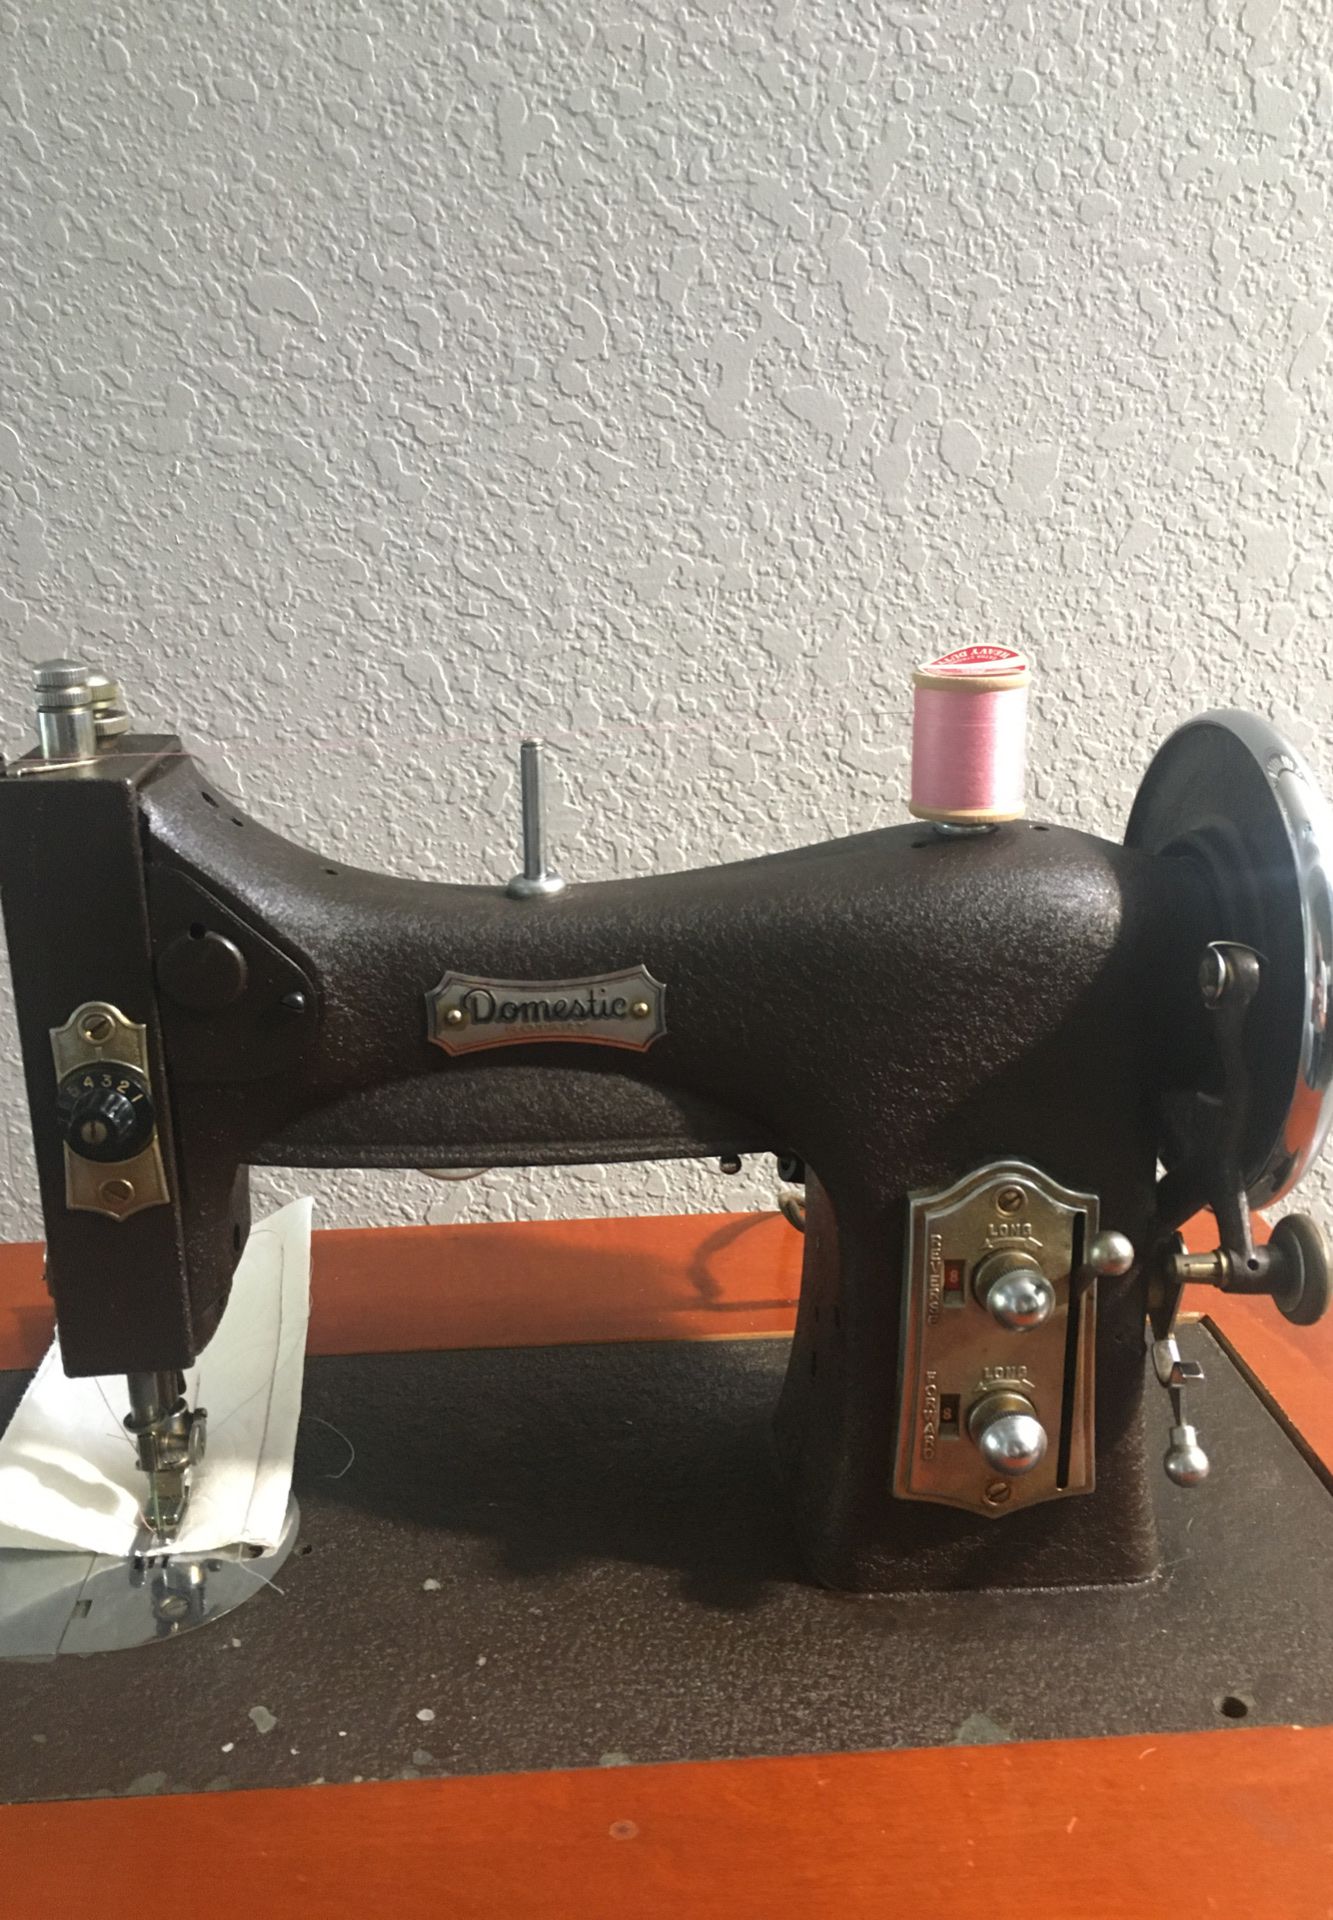 Sewing machine - Domestic